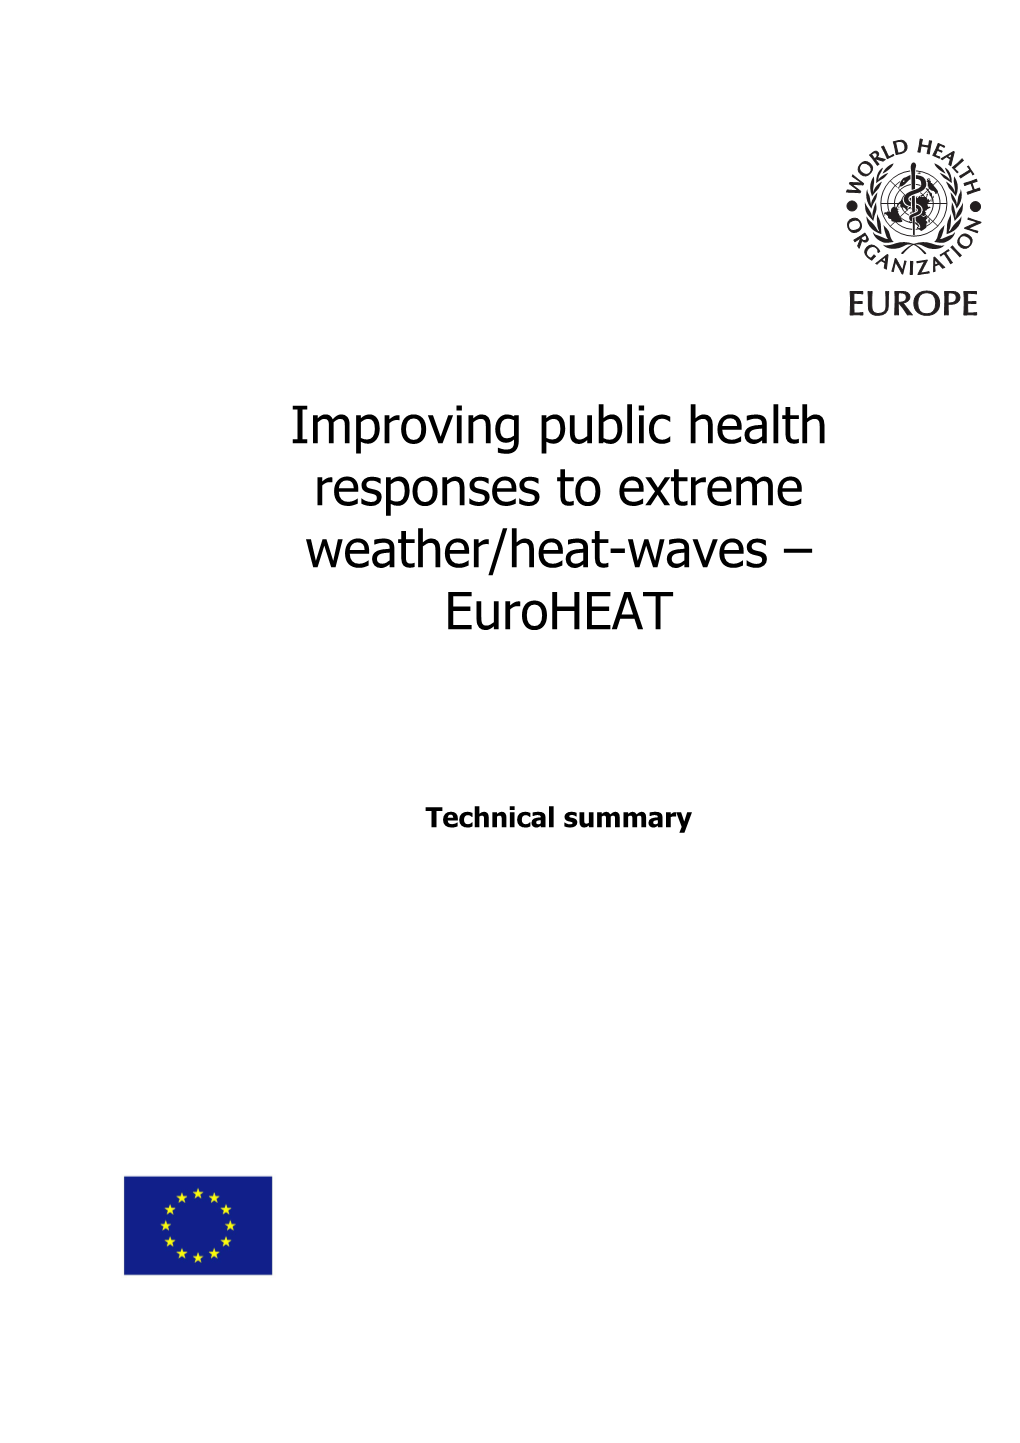 Improving Public Health Responses to Extreme Weather/Heat-Waves – Euroheat